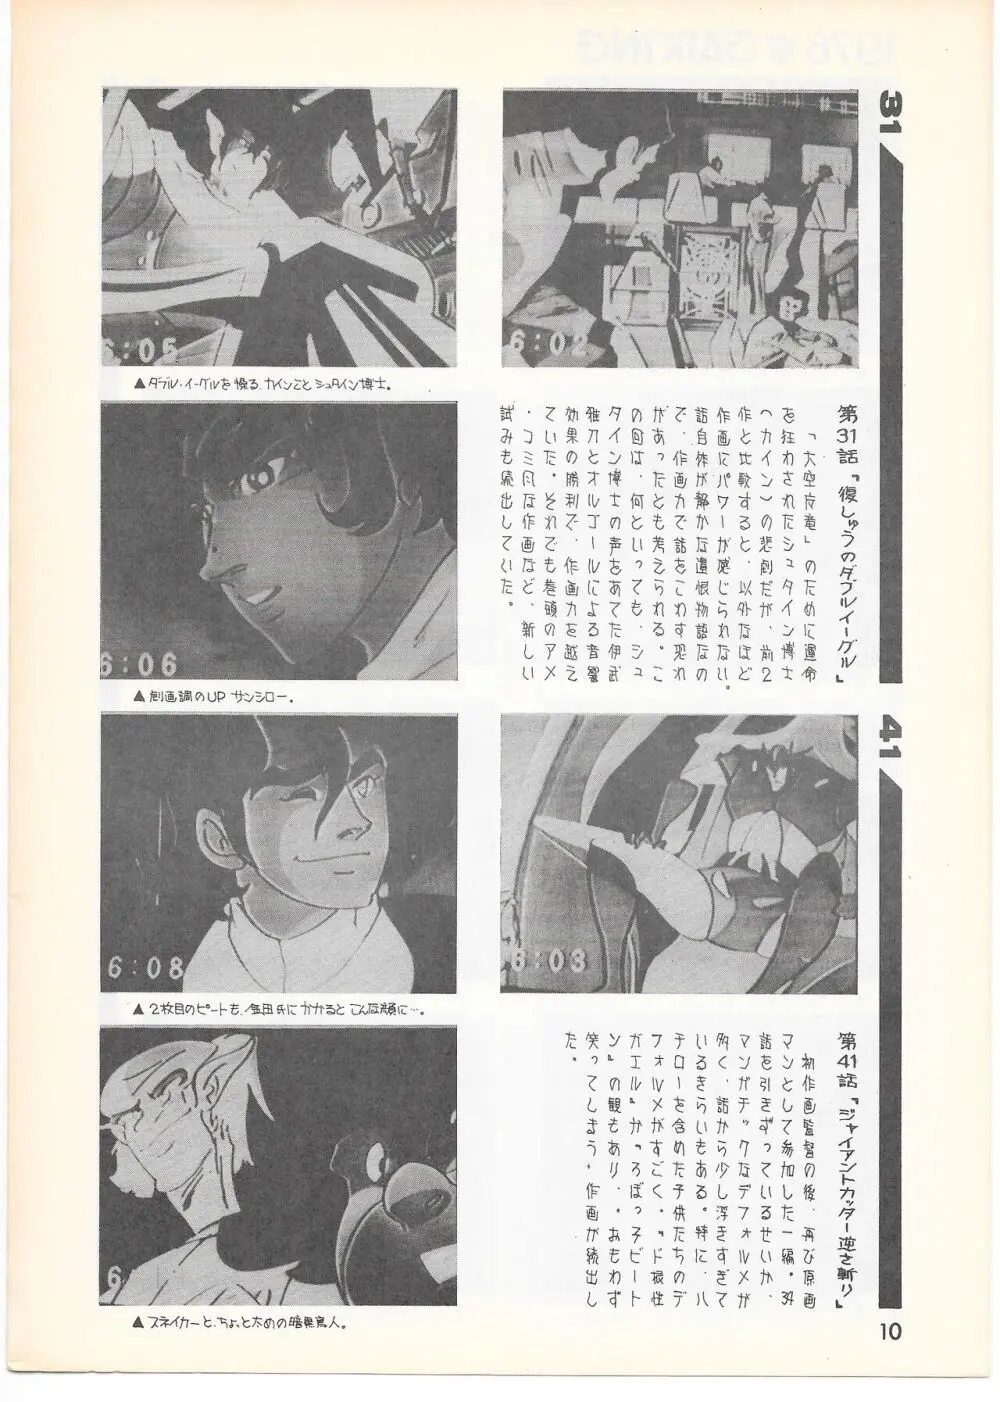 THE ANIMATOR 1 金田伊功特集号 - page9